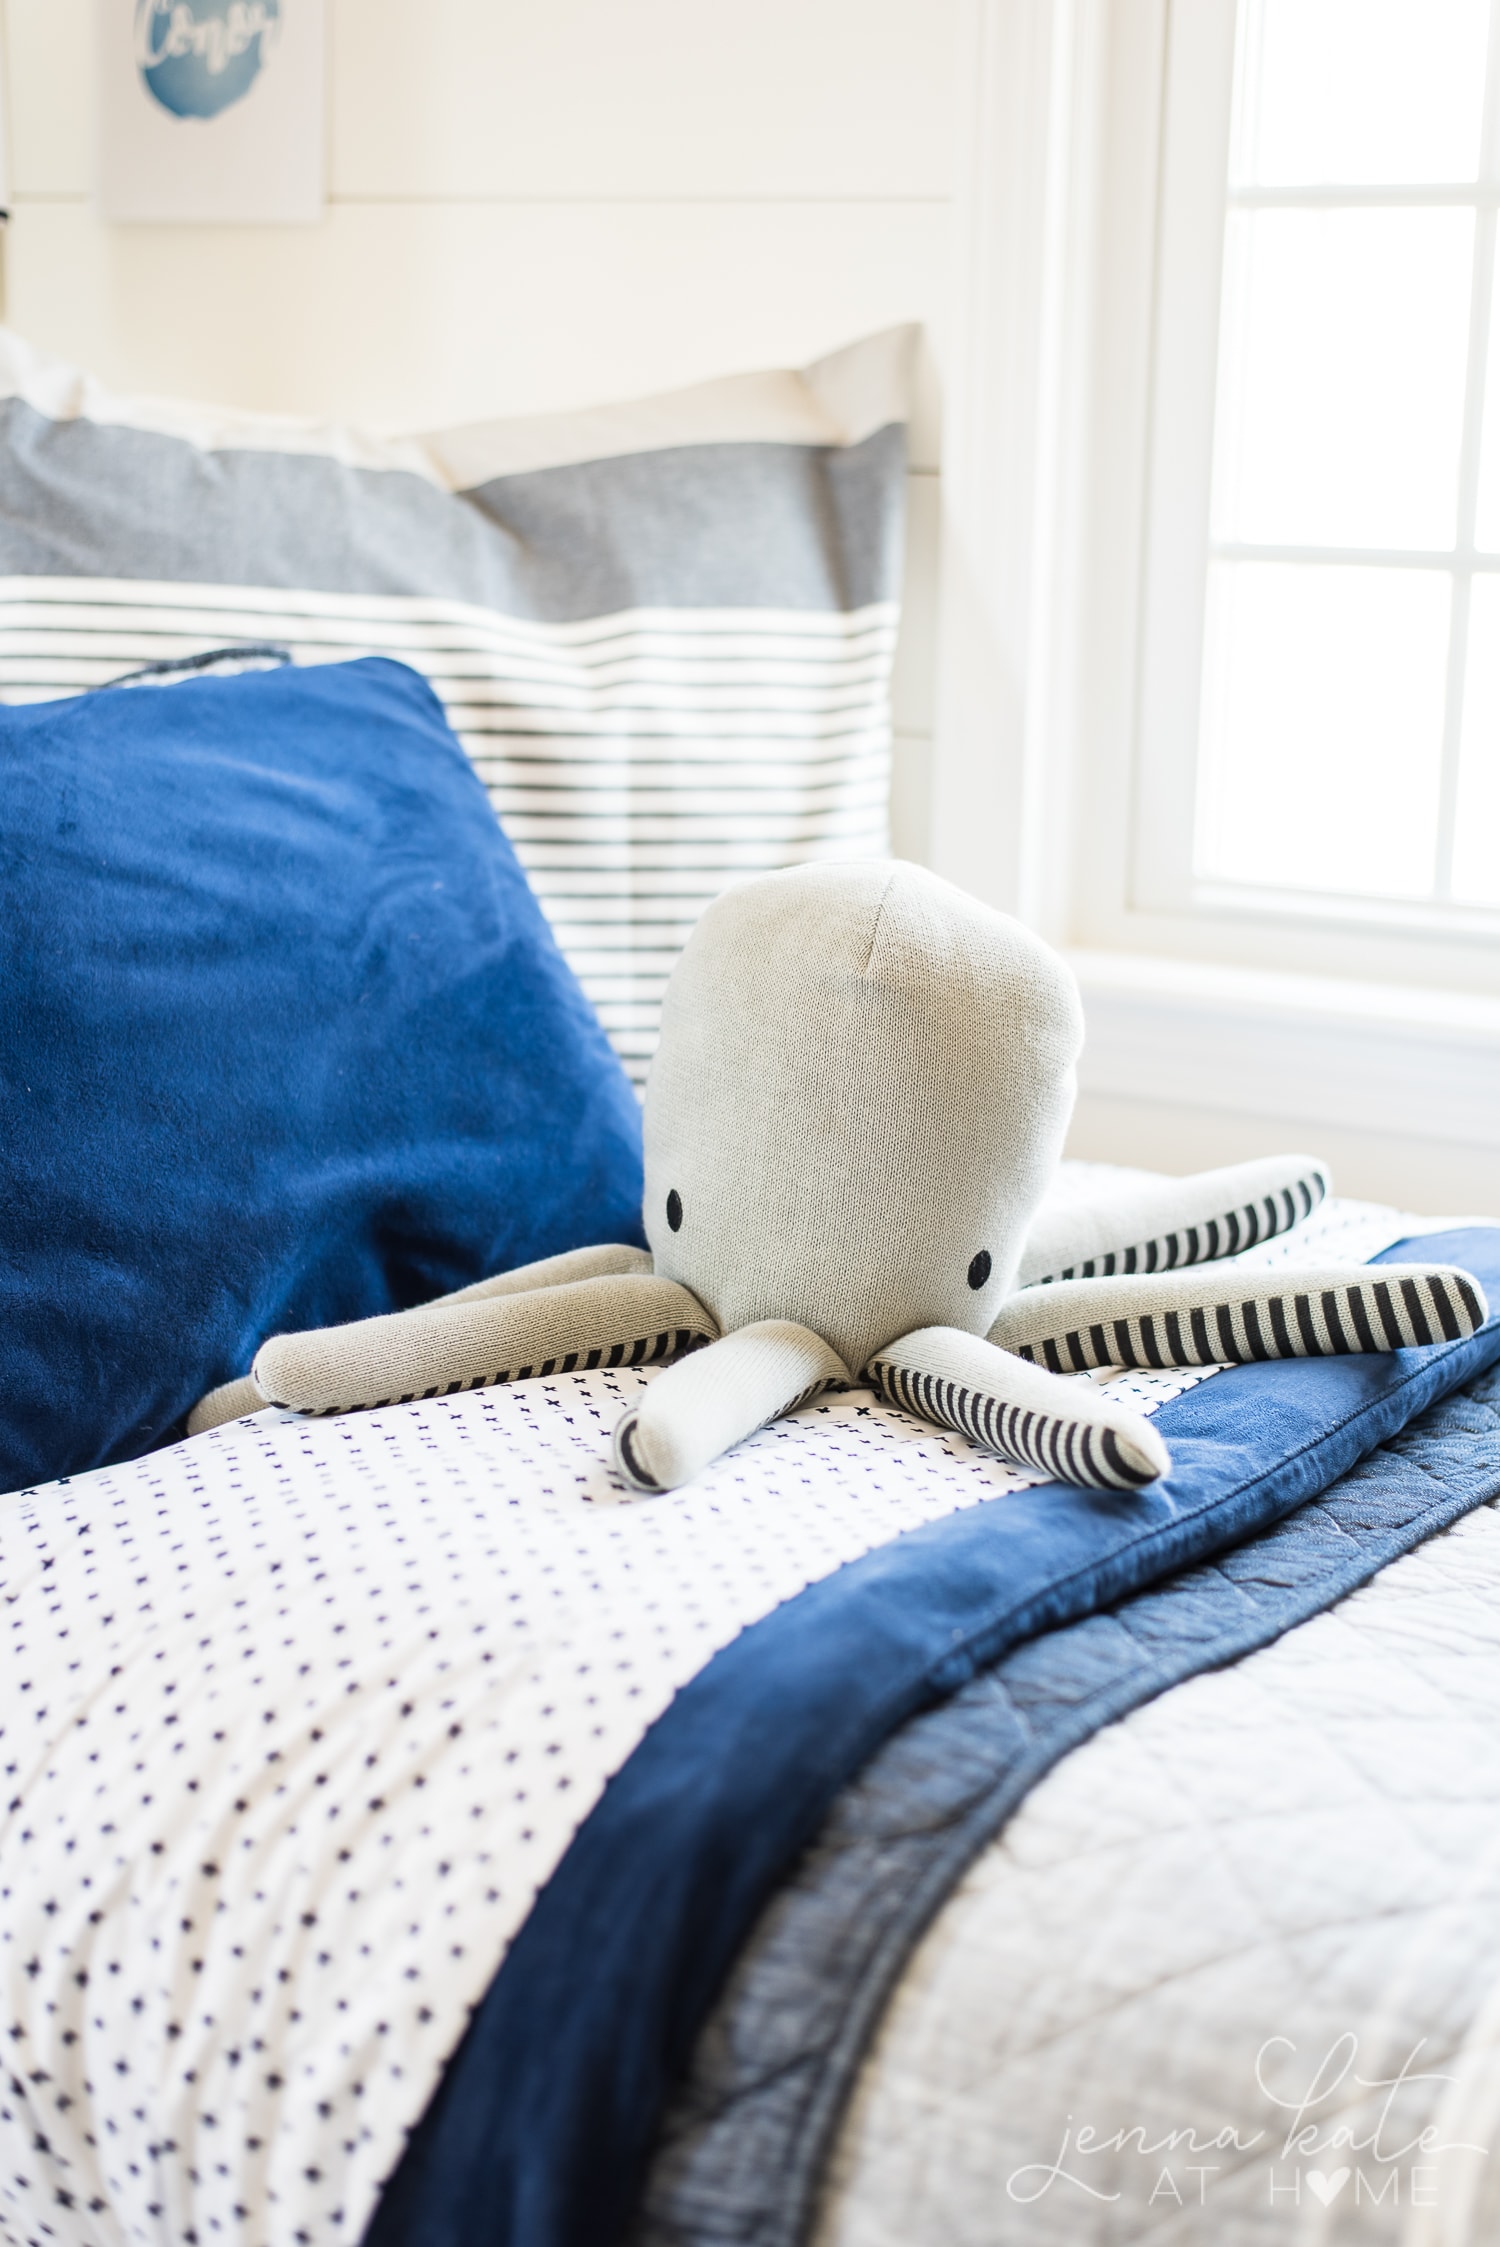 Toy octopus on bed. Fun boy bedroom decor ideas.